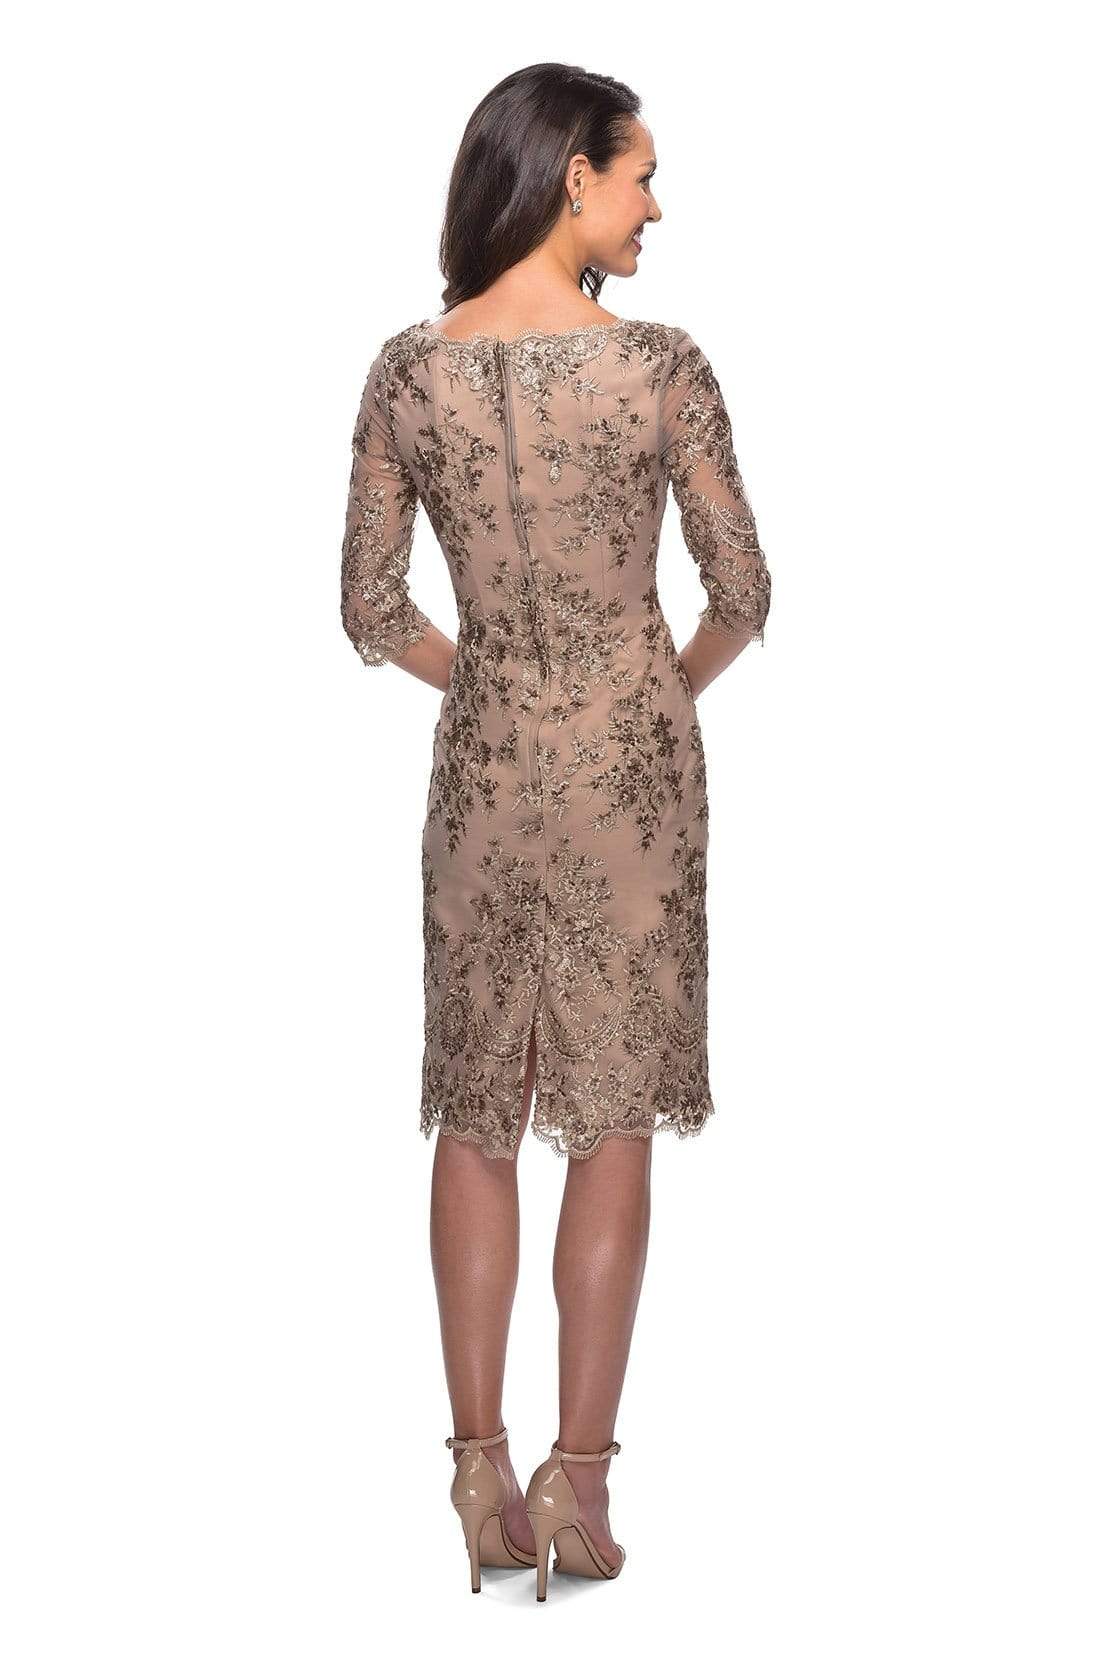 La Femme - 26871 Knee Length Quarter Sleeve Sequined Dress Special Occasion Dress